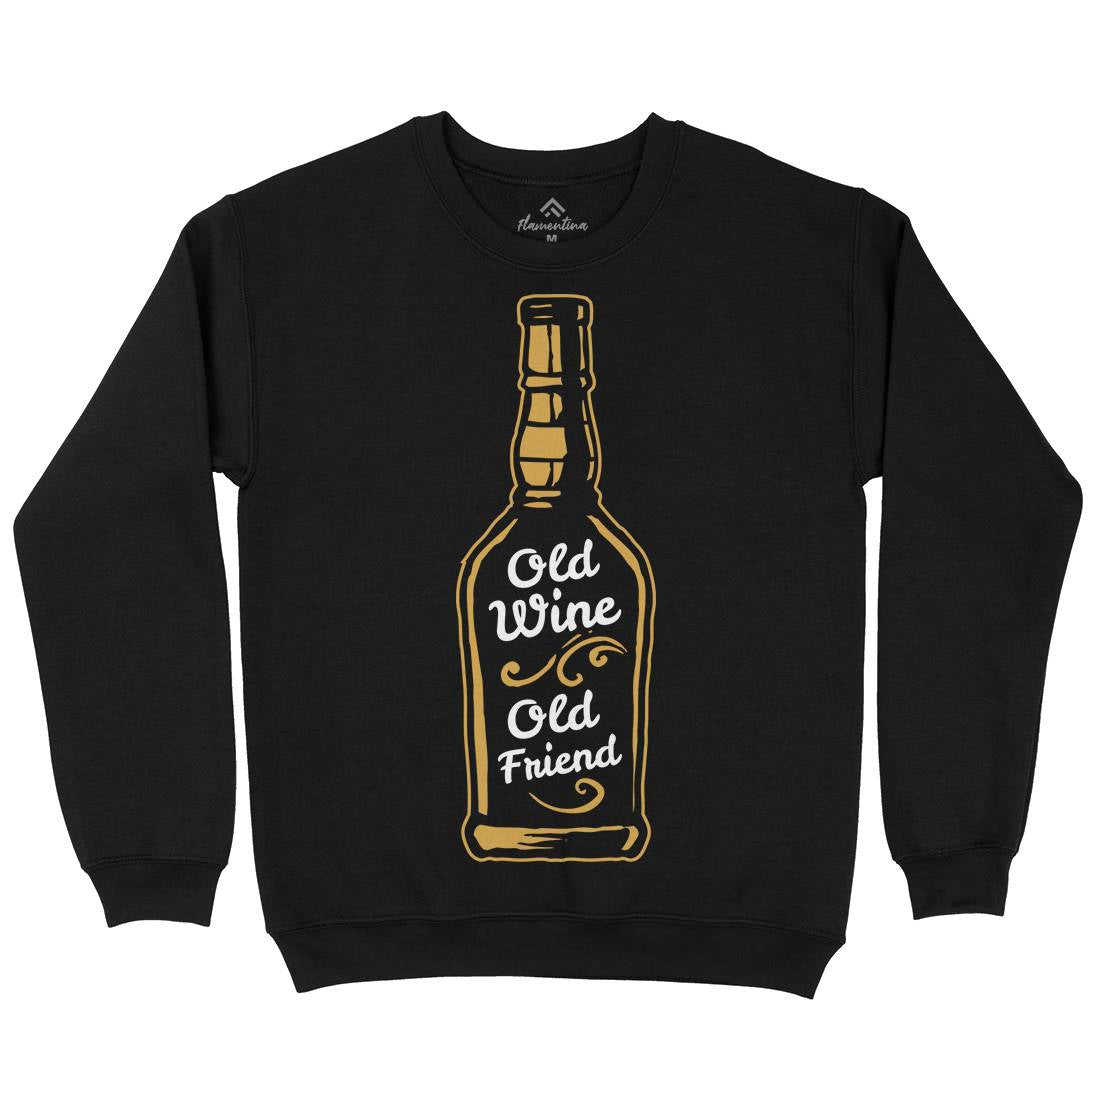 Old Wine Mens Crew Neck Sweatshirt Quotes A357